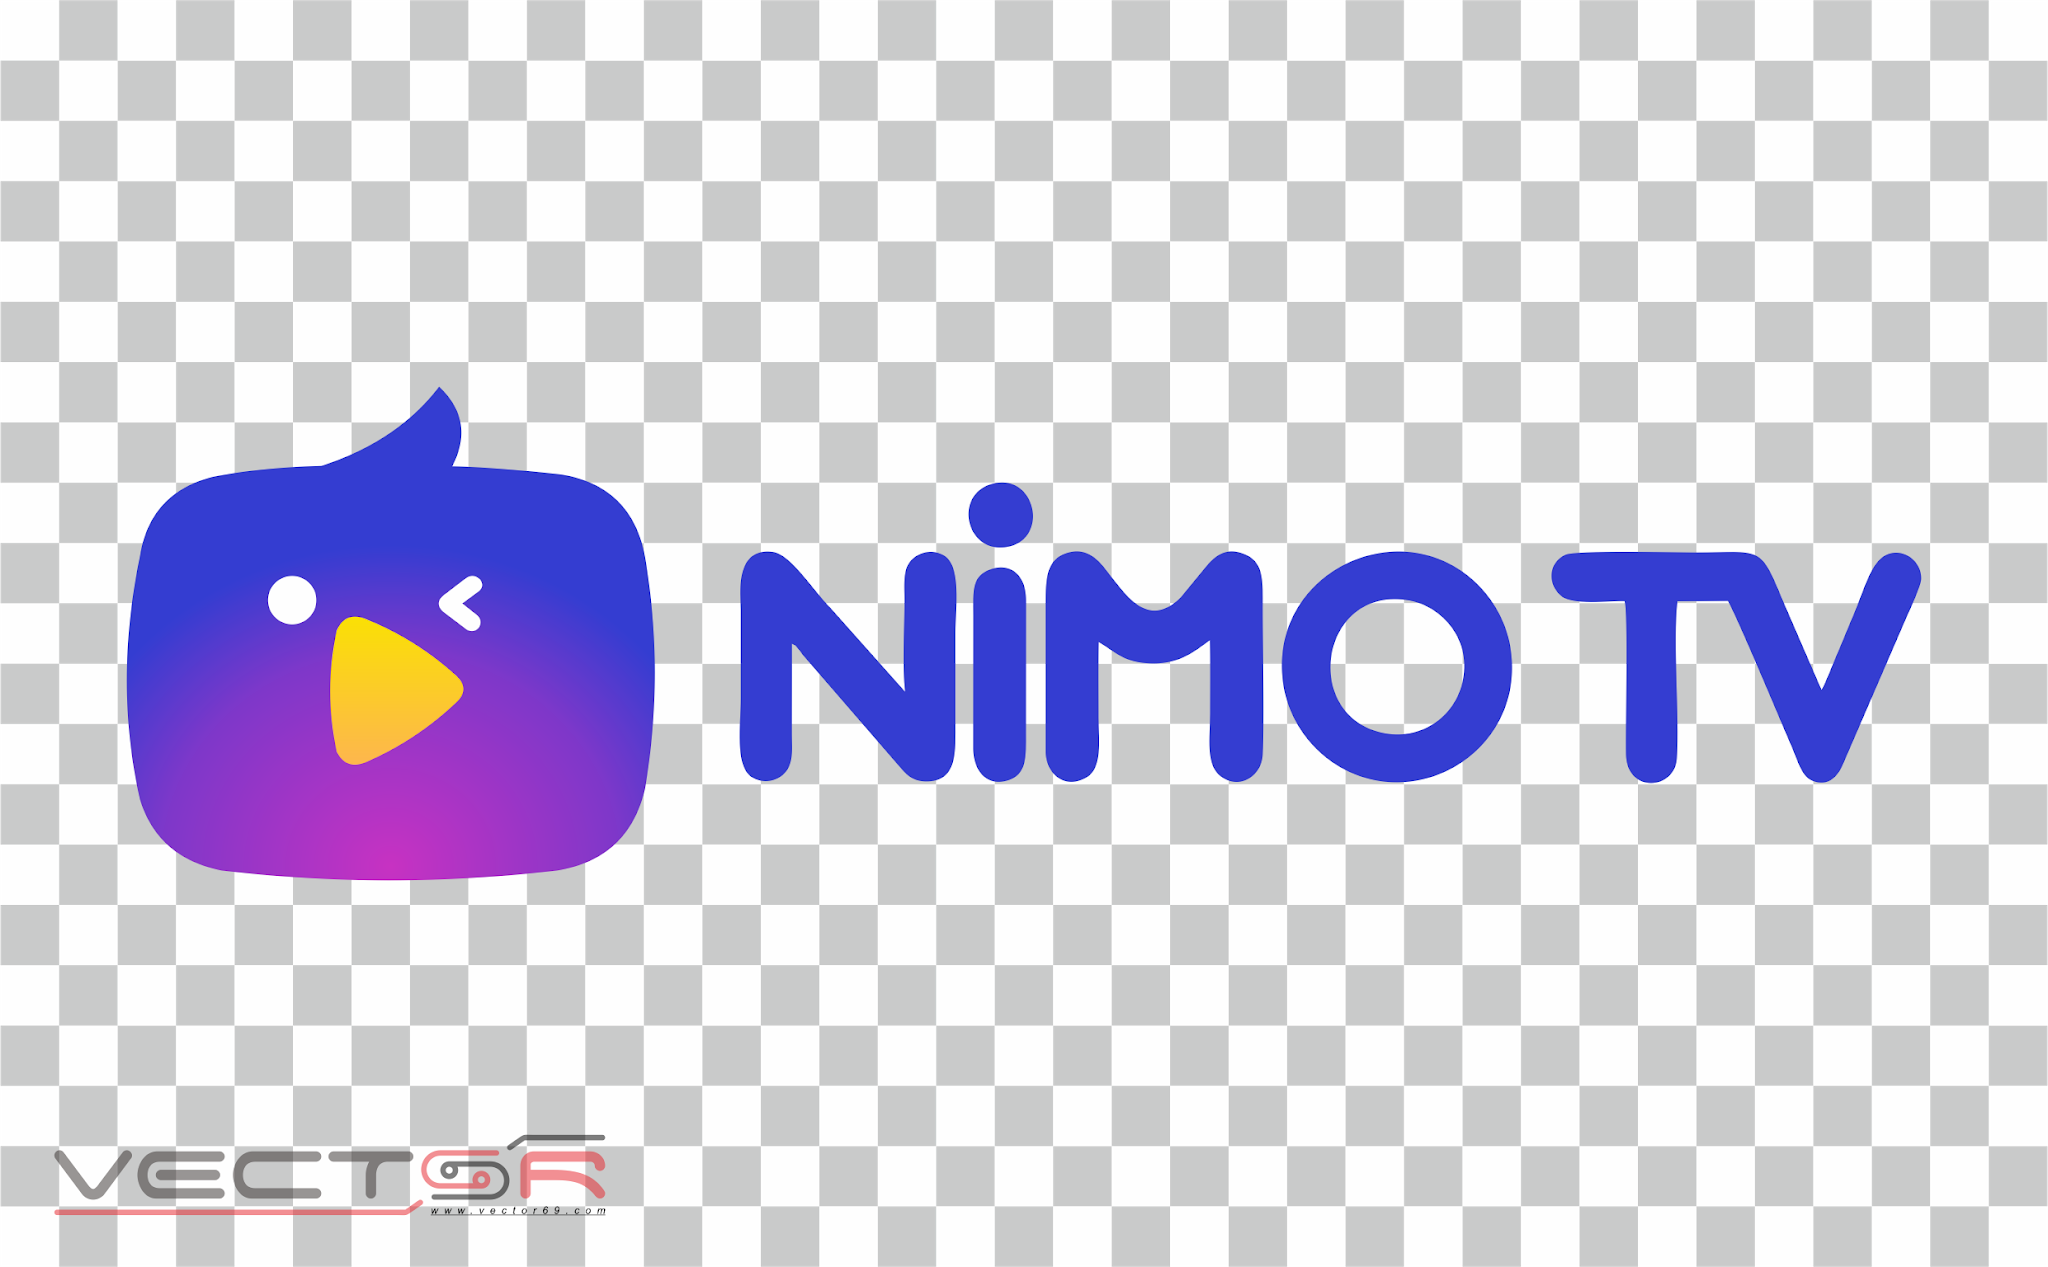 Nimo TV Logo